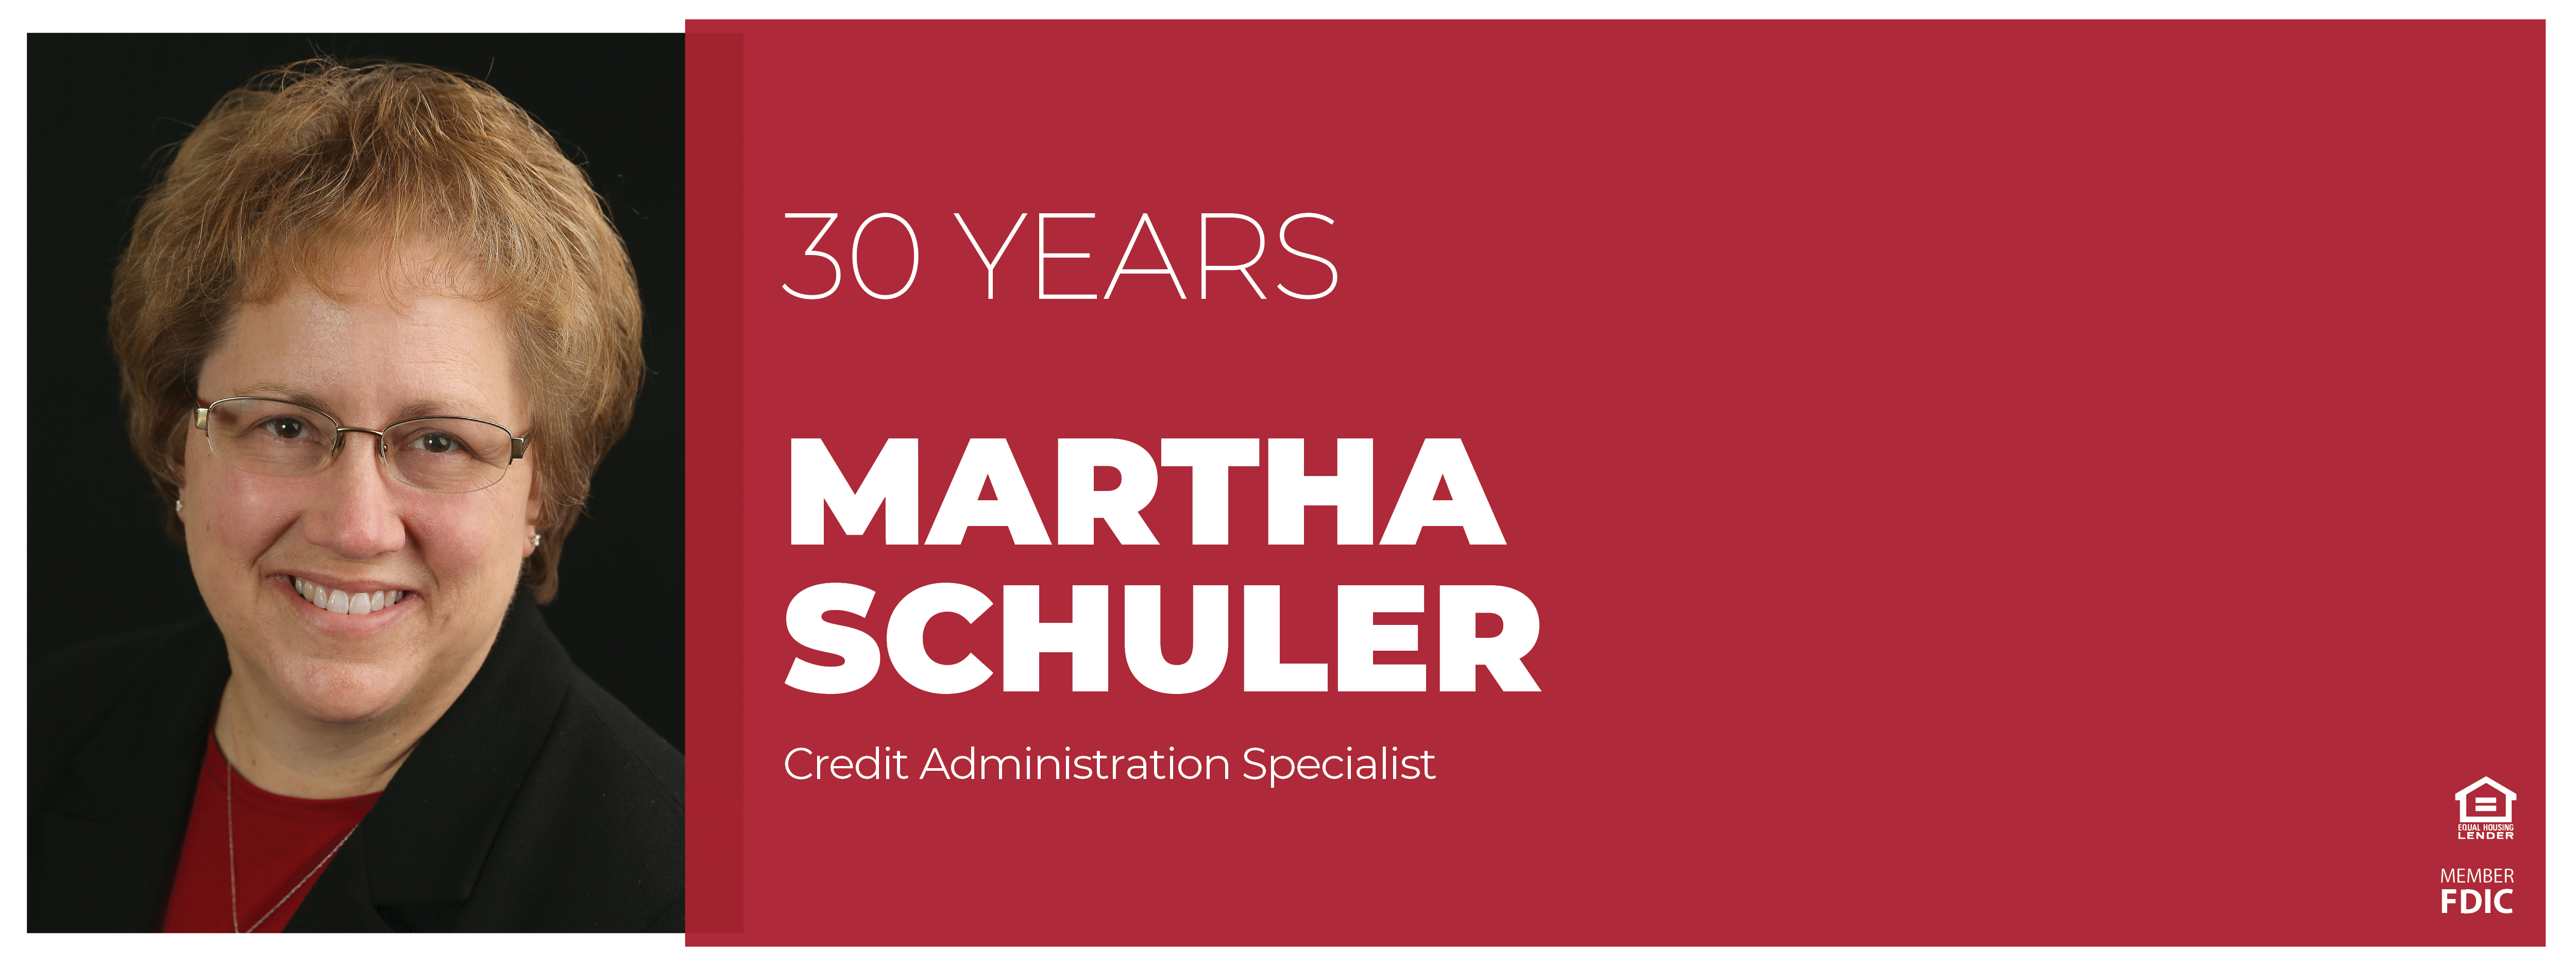 Martha Schuler 30 years